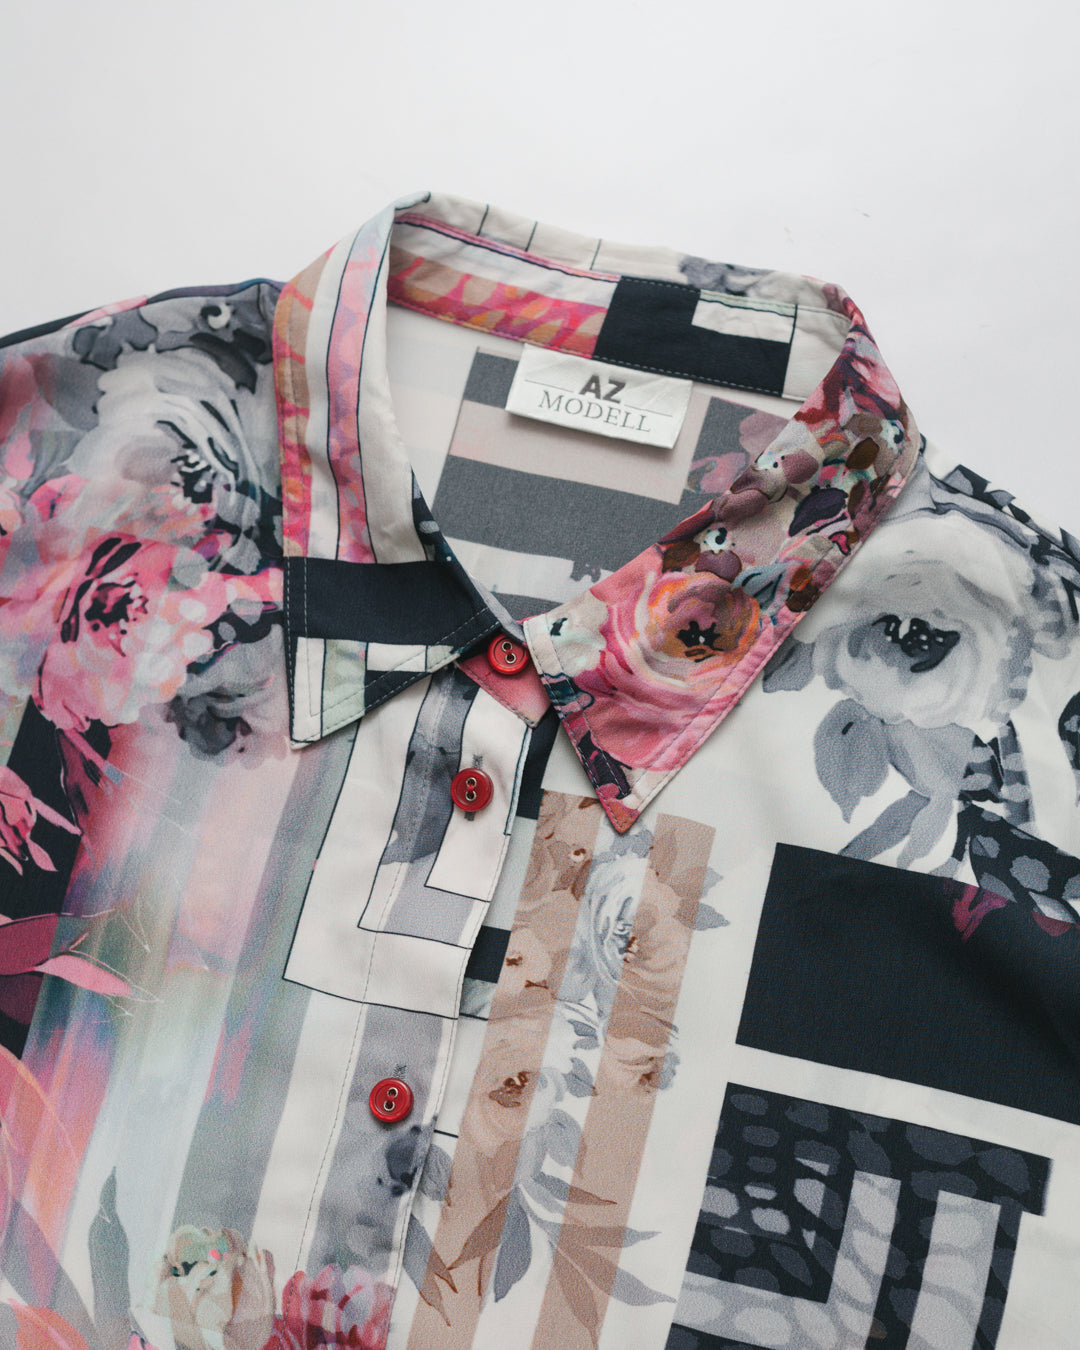 Floral print button down shirt